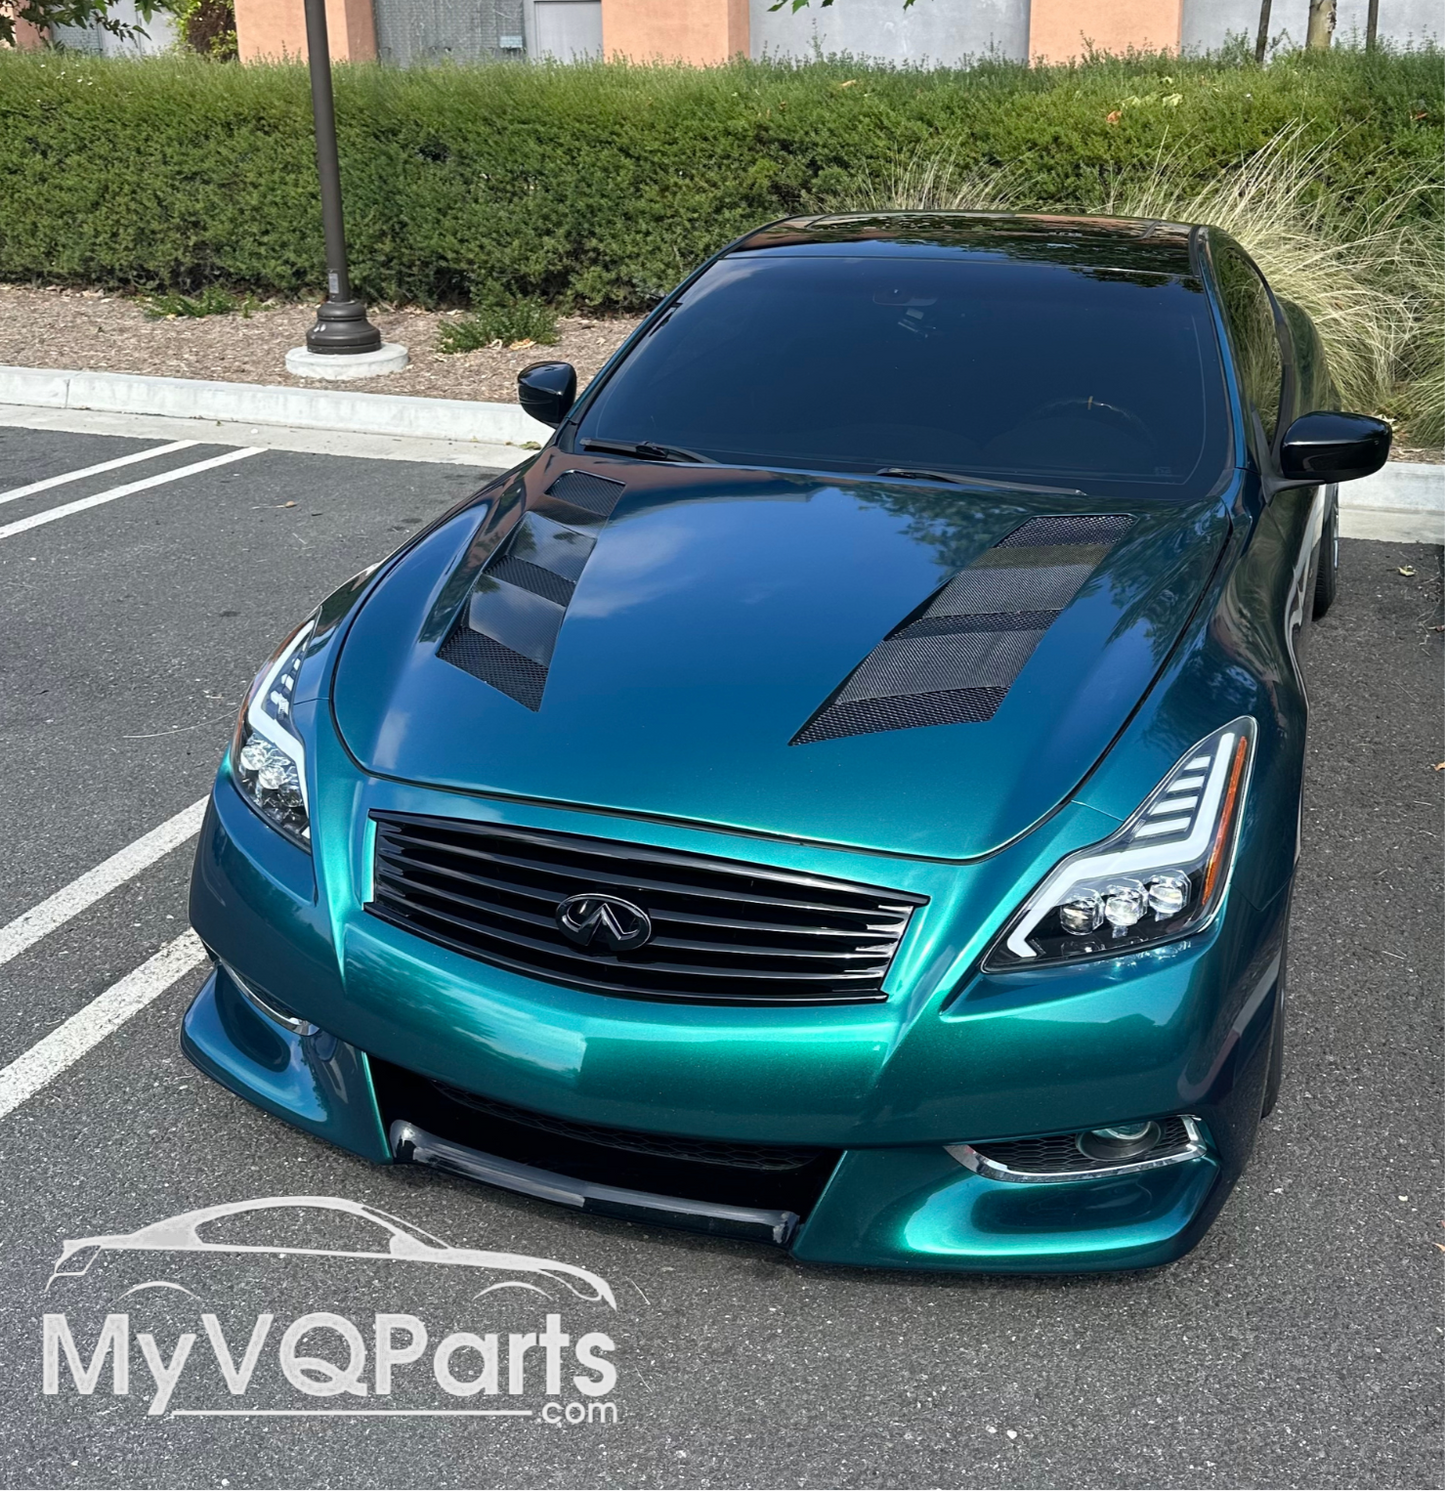 MyVQParts G37 Coupe Full Carbon Fiber Vented Hood